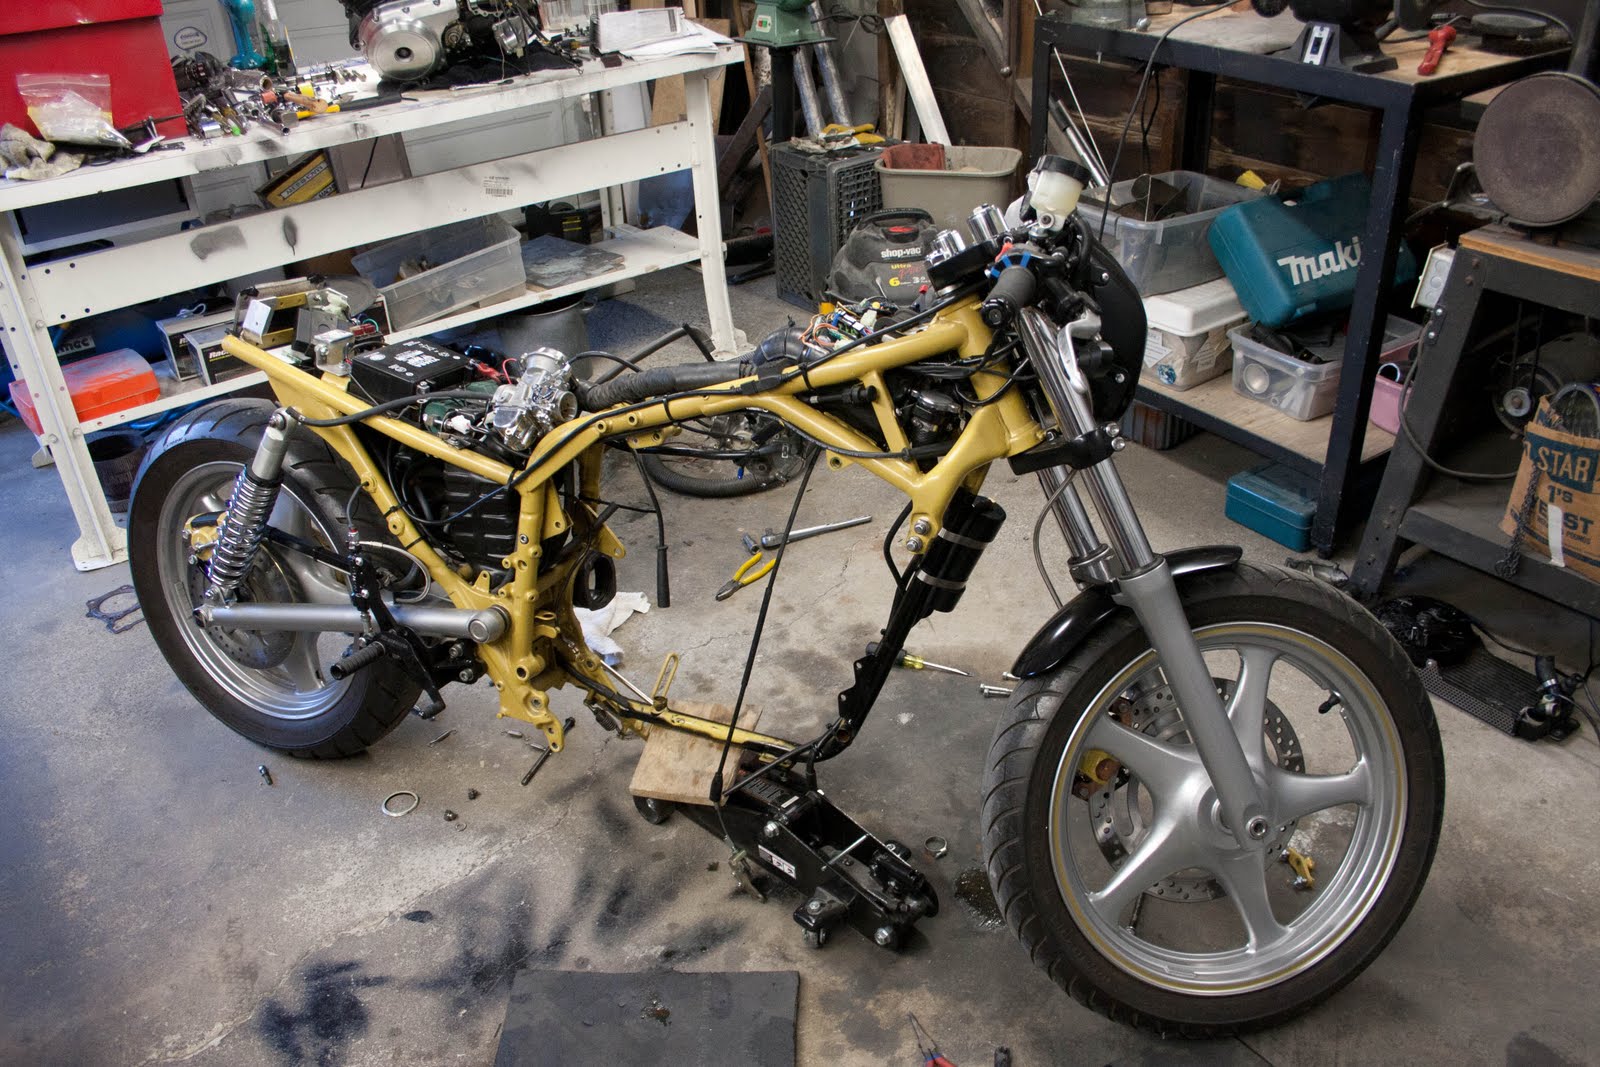 Suzuki VX800 Restoration Project: Latest pic